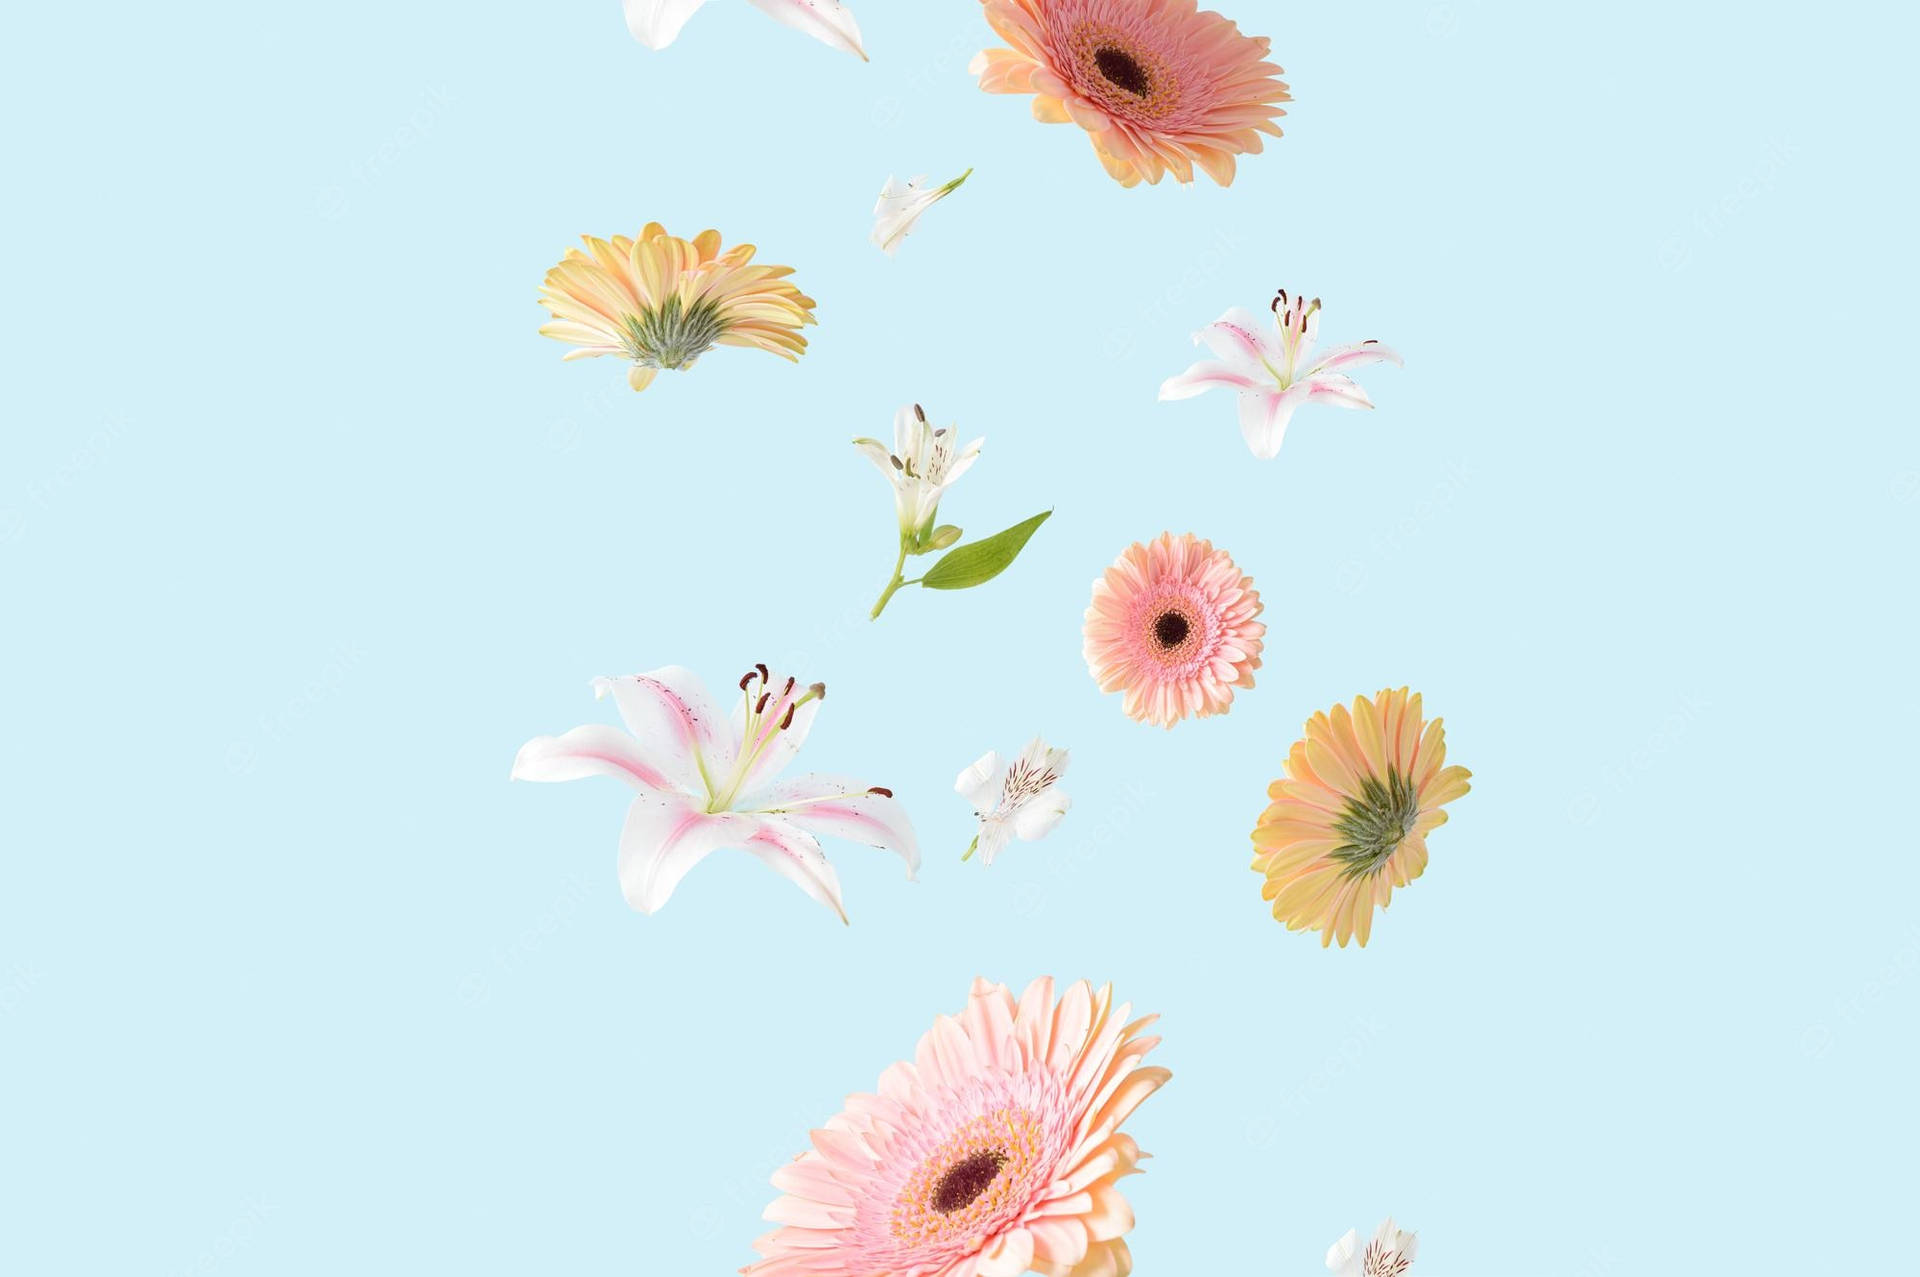 Lovely Aesthetic Spring Iphone Theme Wallpaper